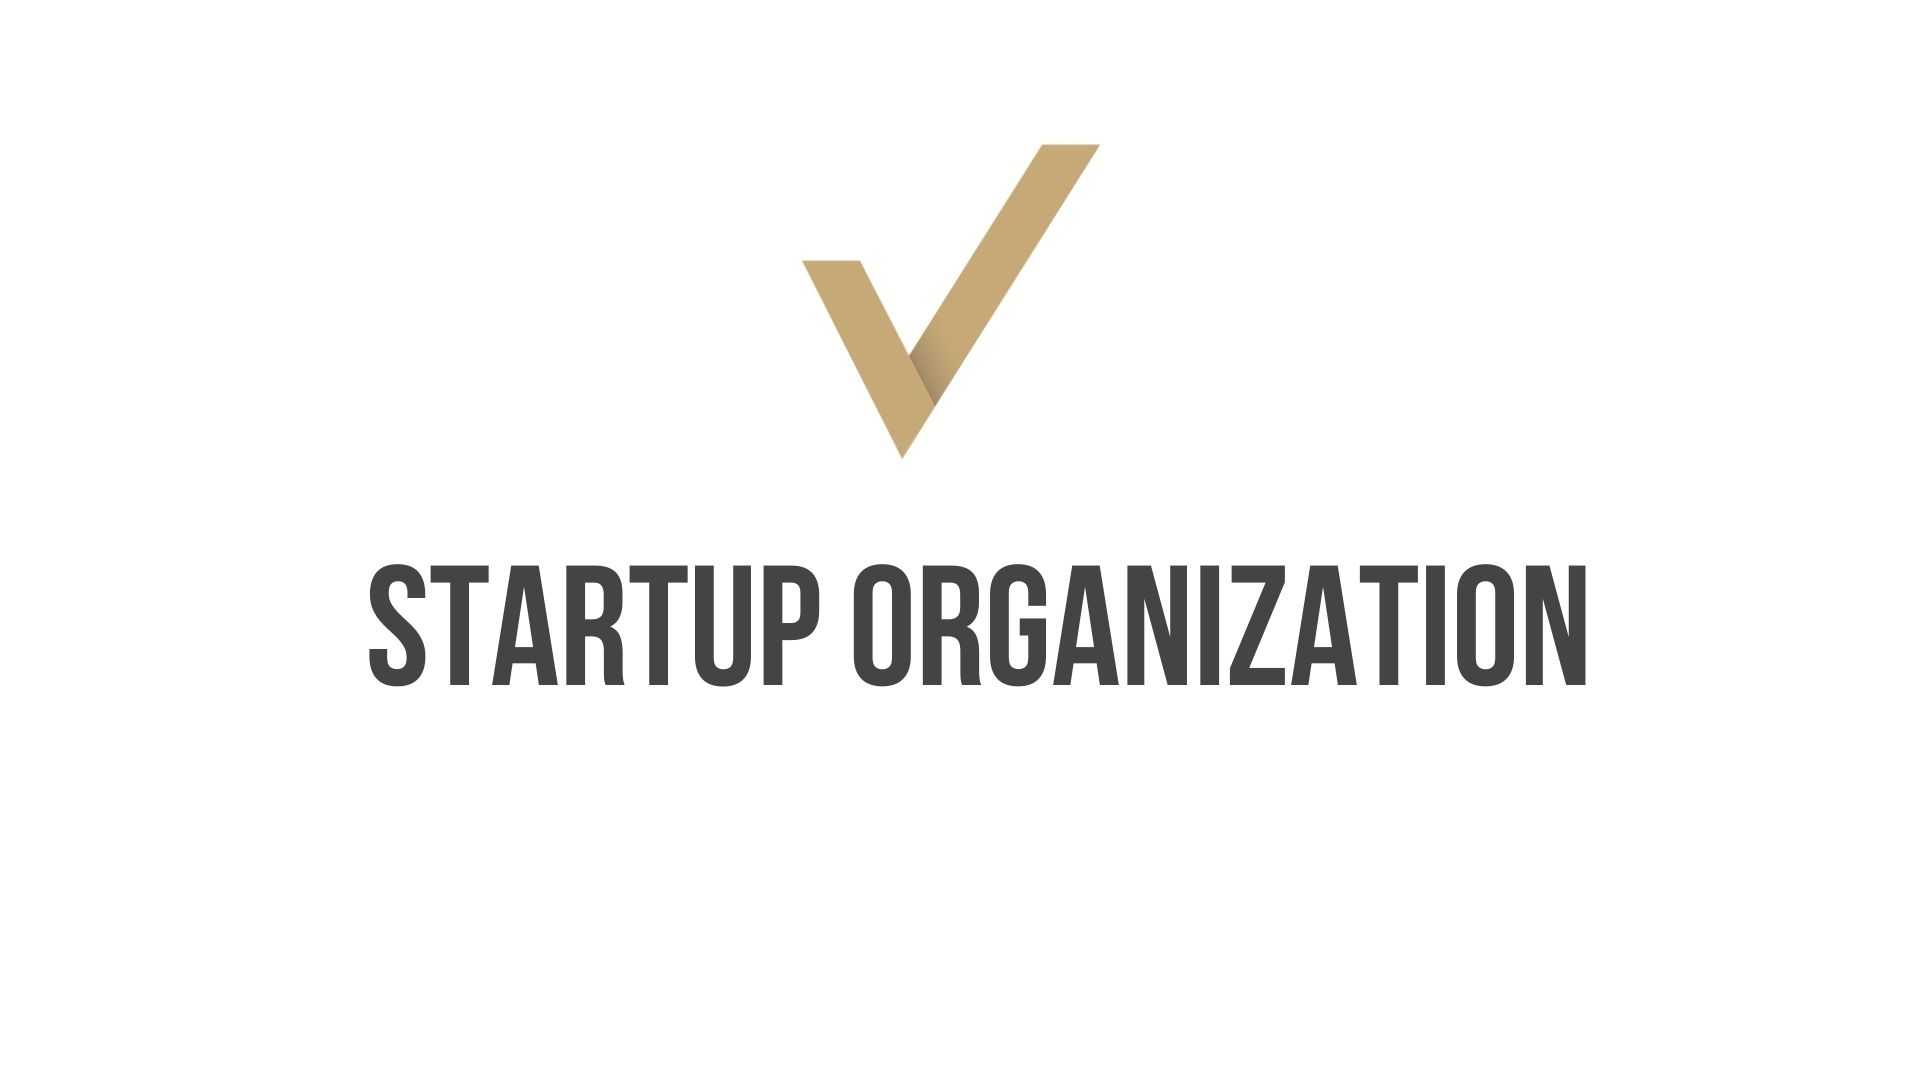 Startup Initial Organization